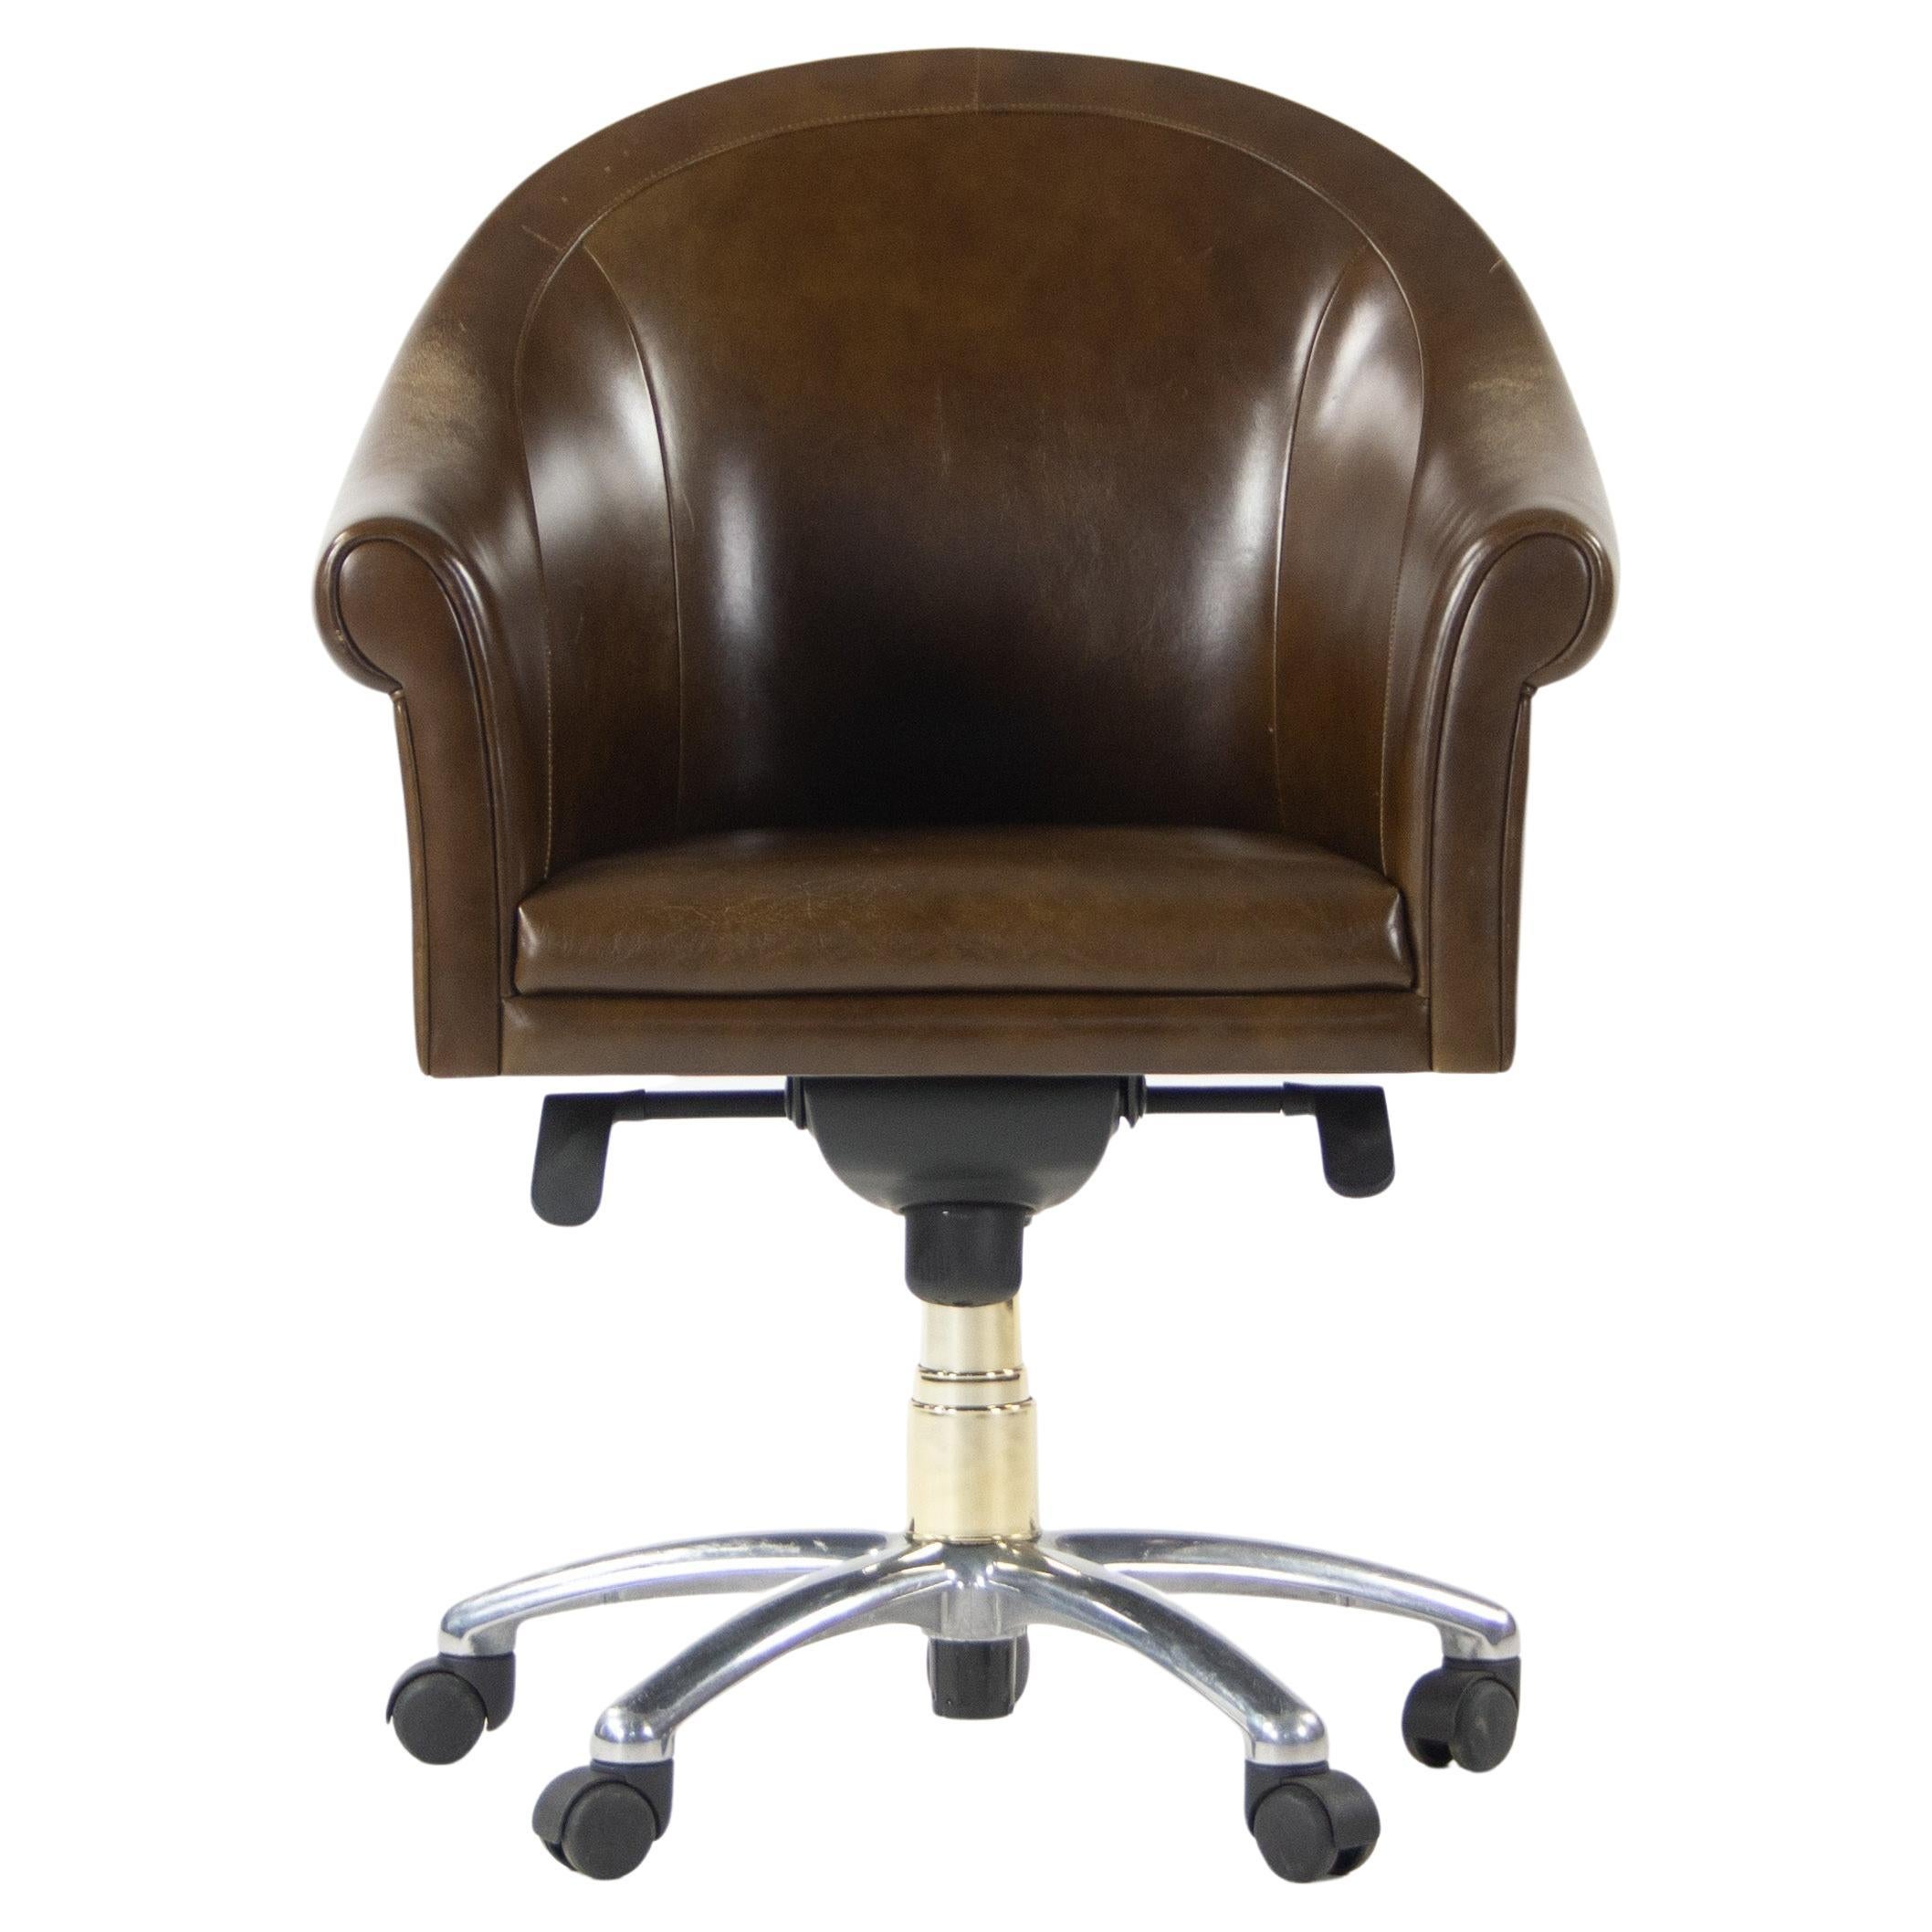 Poltrona Frau Brown Leather Luca Scacchetti Sinan Office Desk Chair